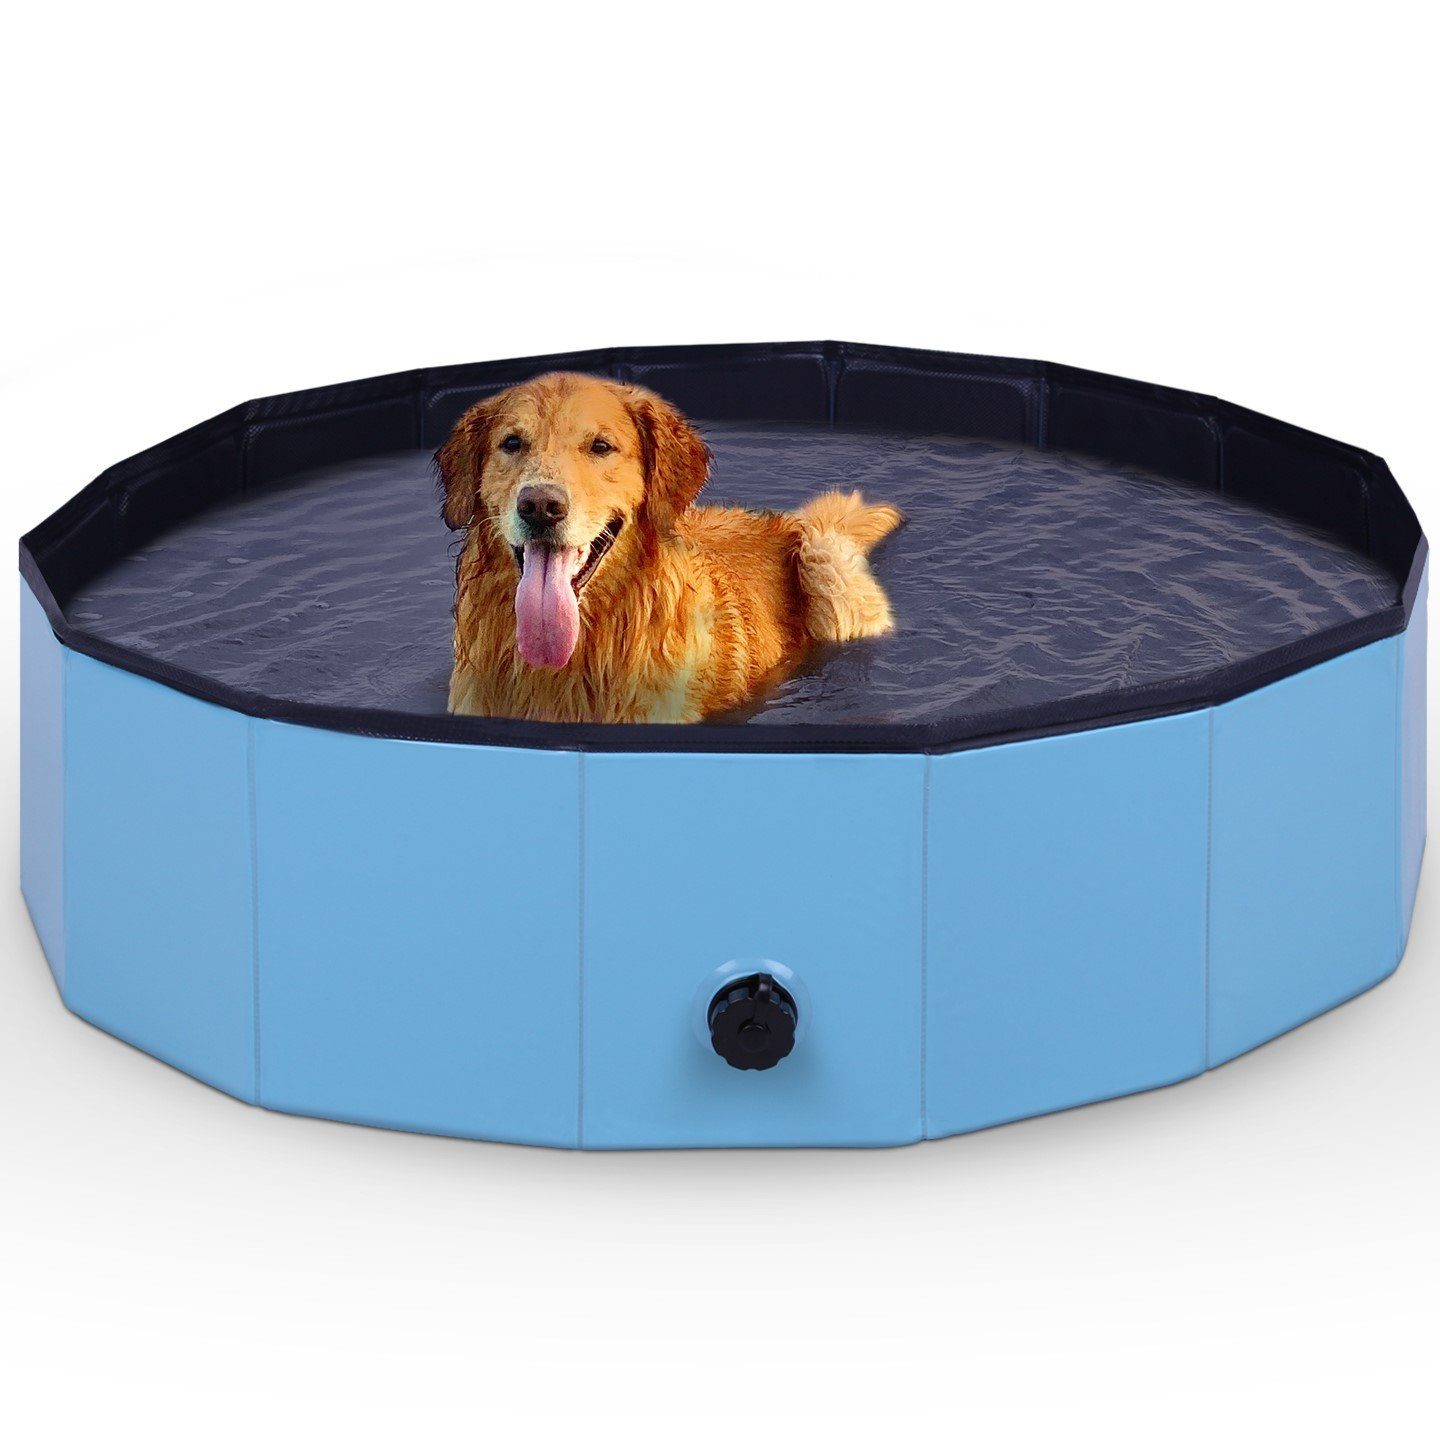 Bestlivings Hundepool Faltbarer Pool für Hunde, (120cm x 30cm), Swimming Pool für Hunde, rutschfester Boden und Ablassventil